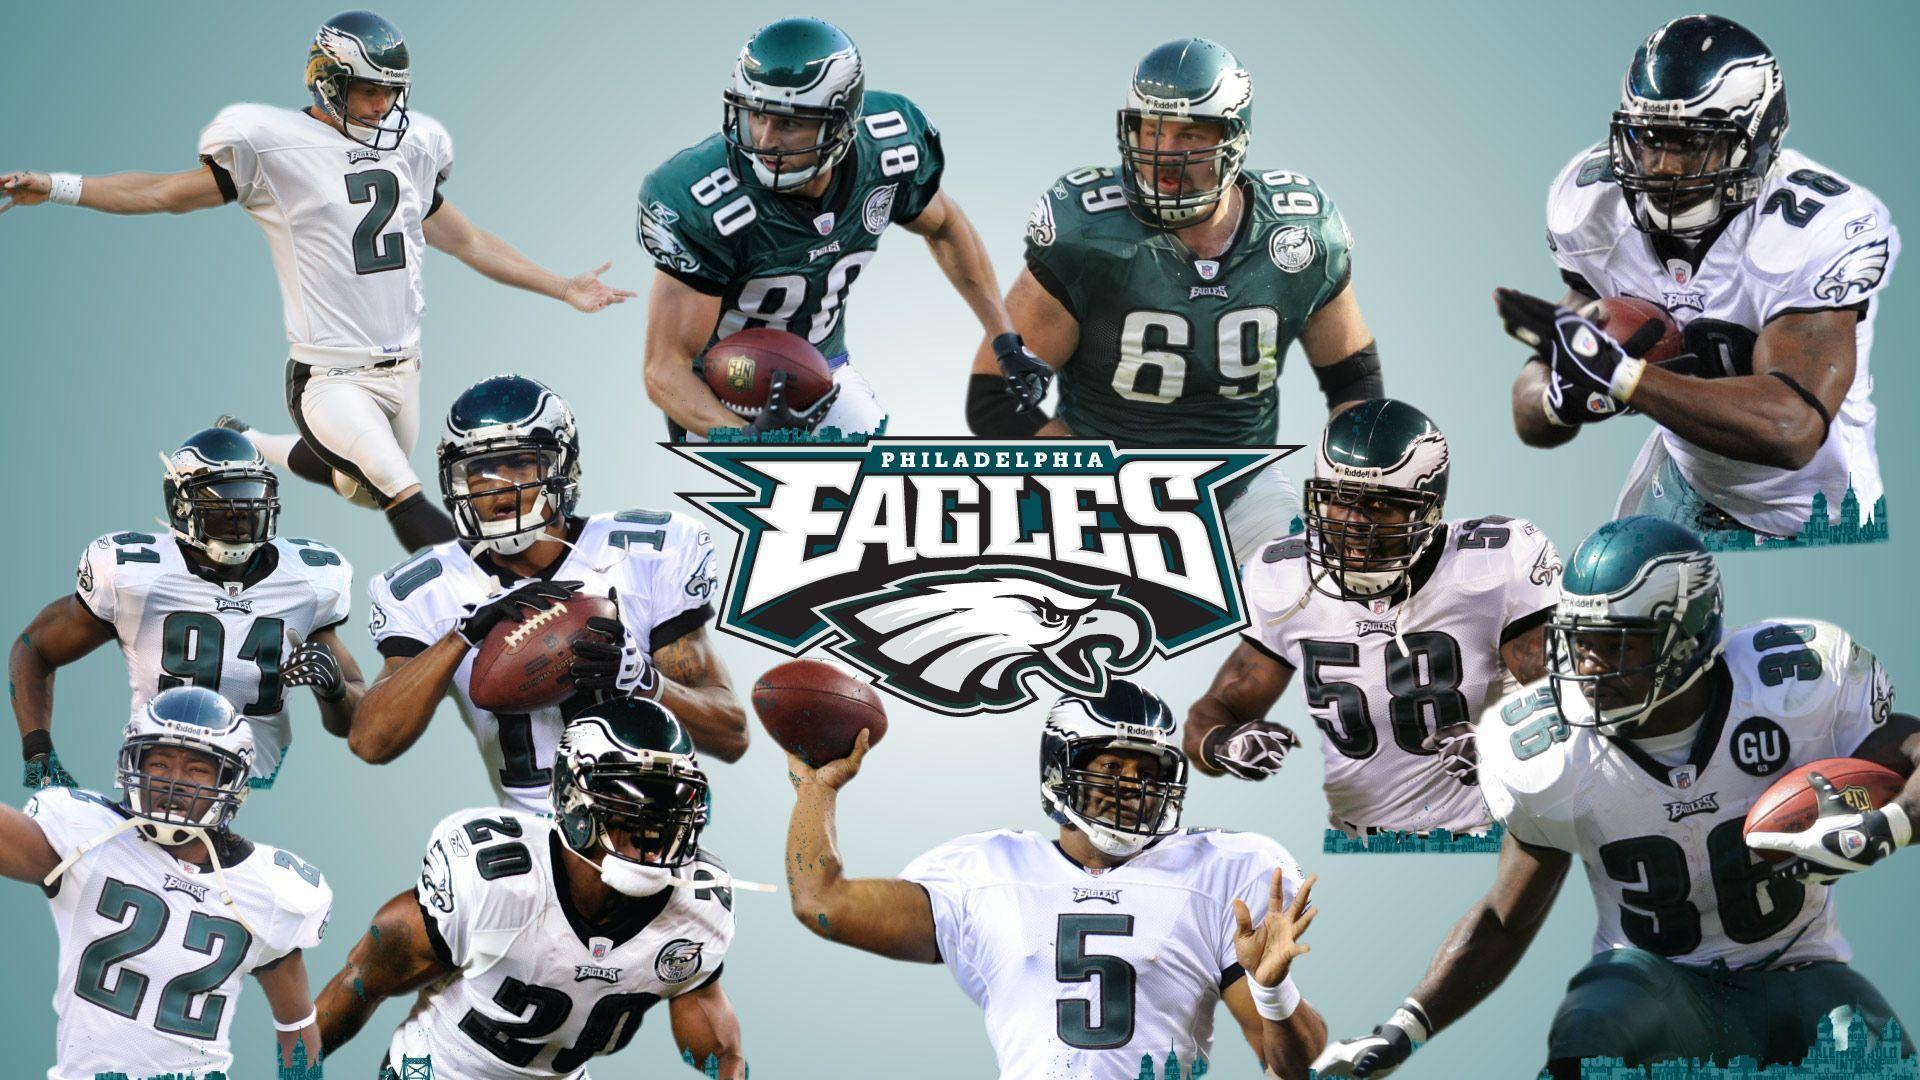 Fascinating Philadelphia Eagles HD Wallpaper Picture 1280x1024PX